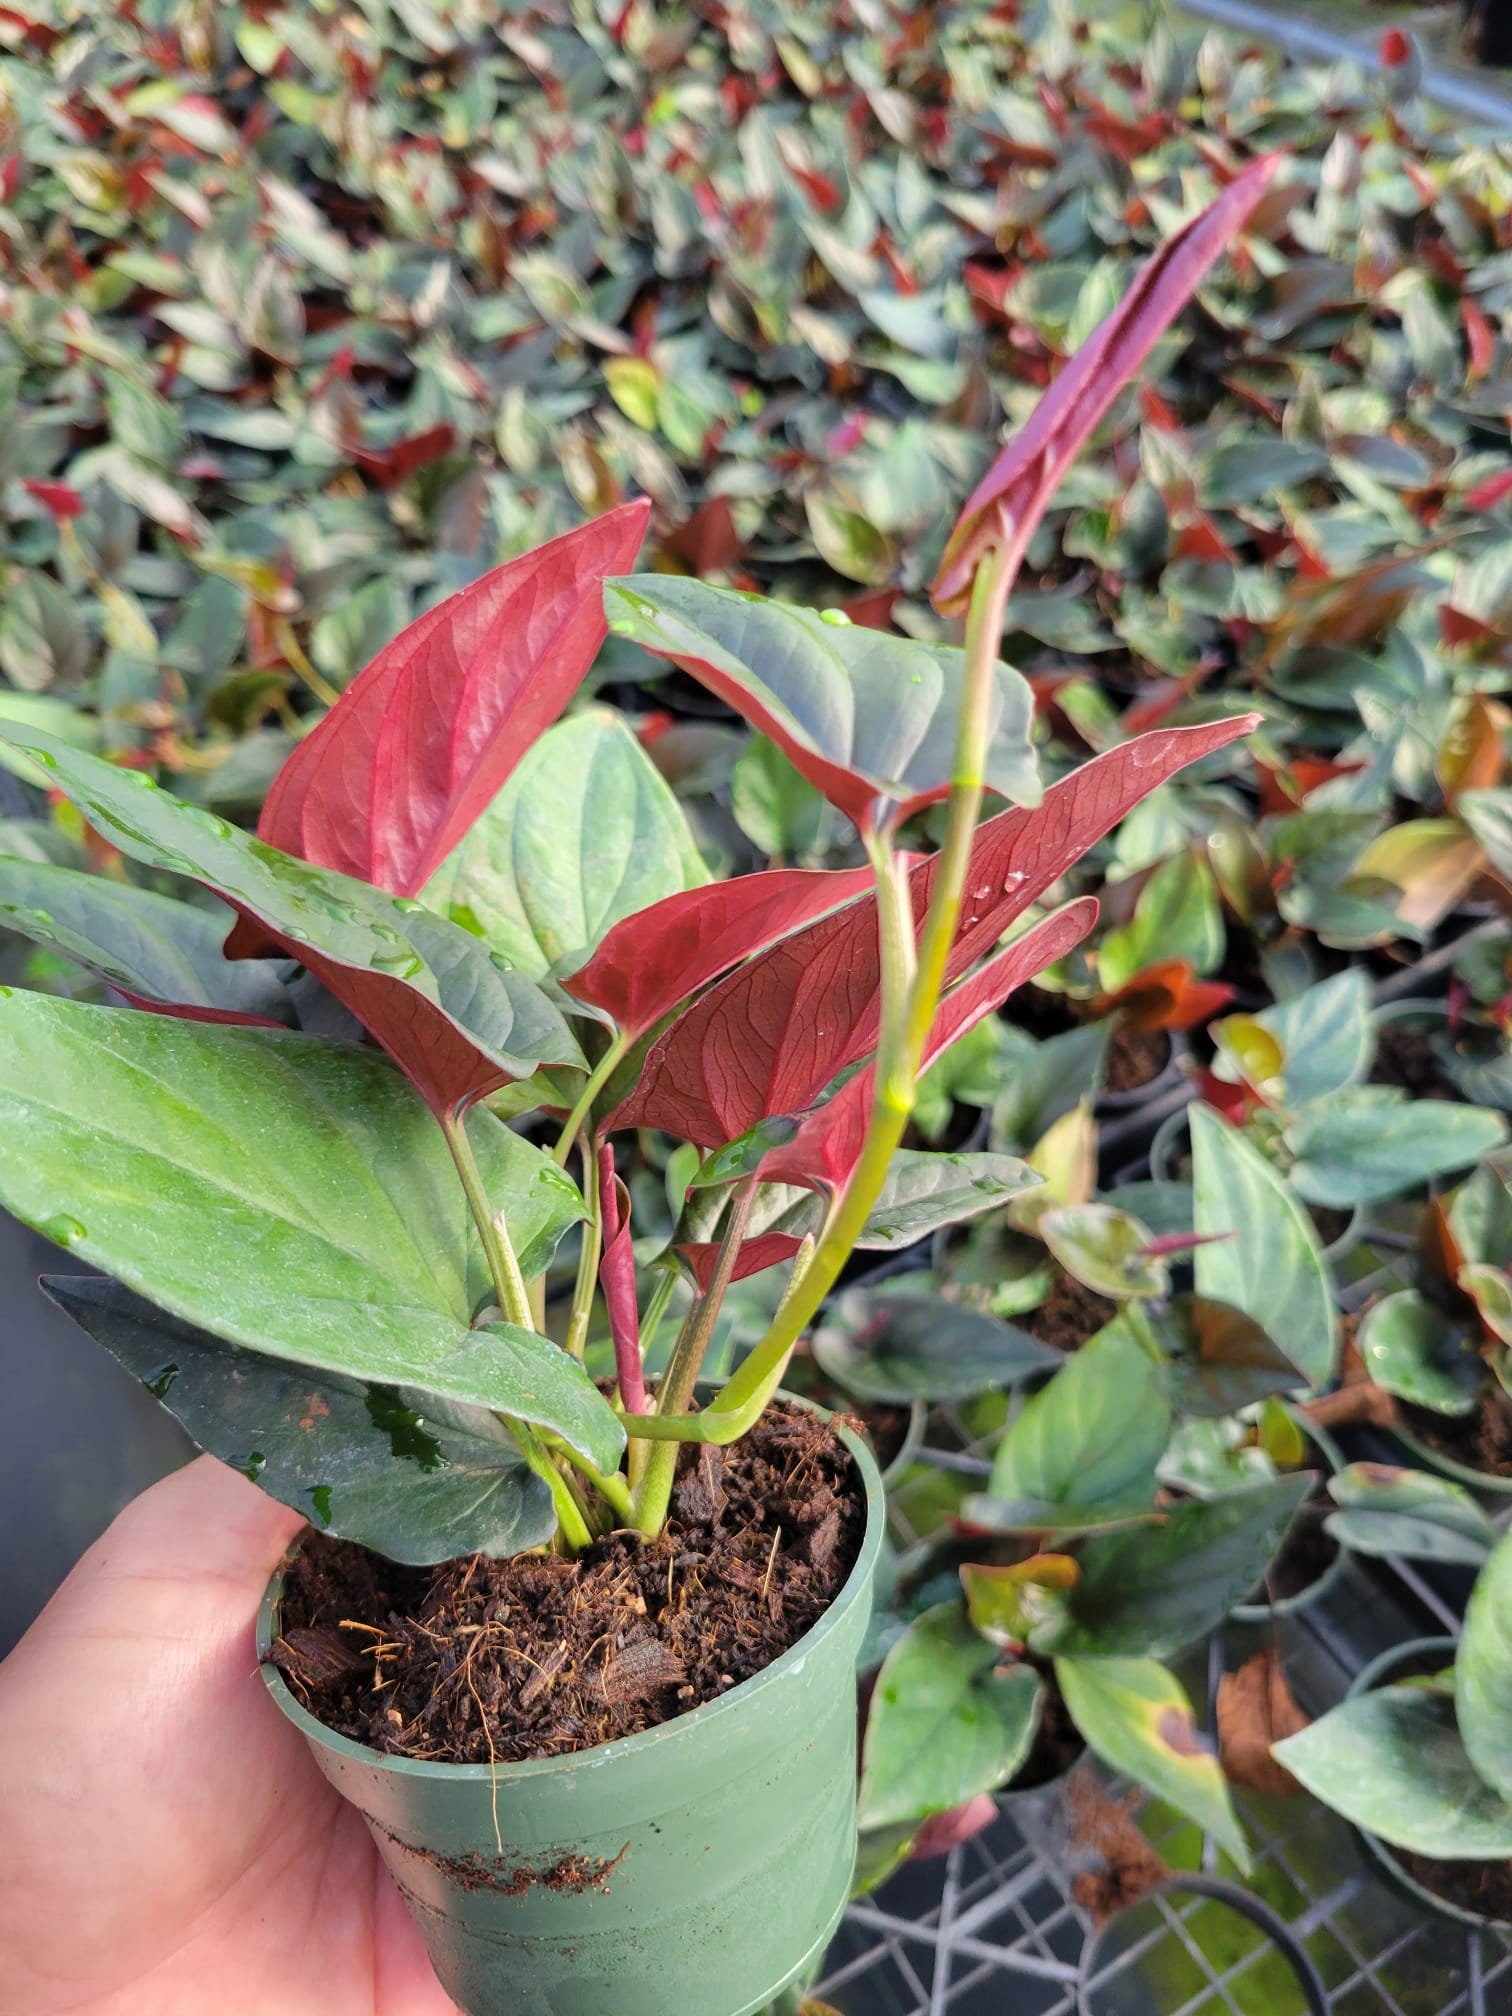 4" Syngonium Erythrophyllum "Red Arrow"